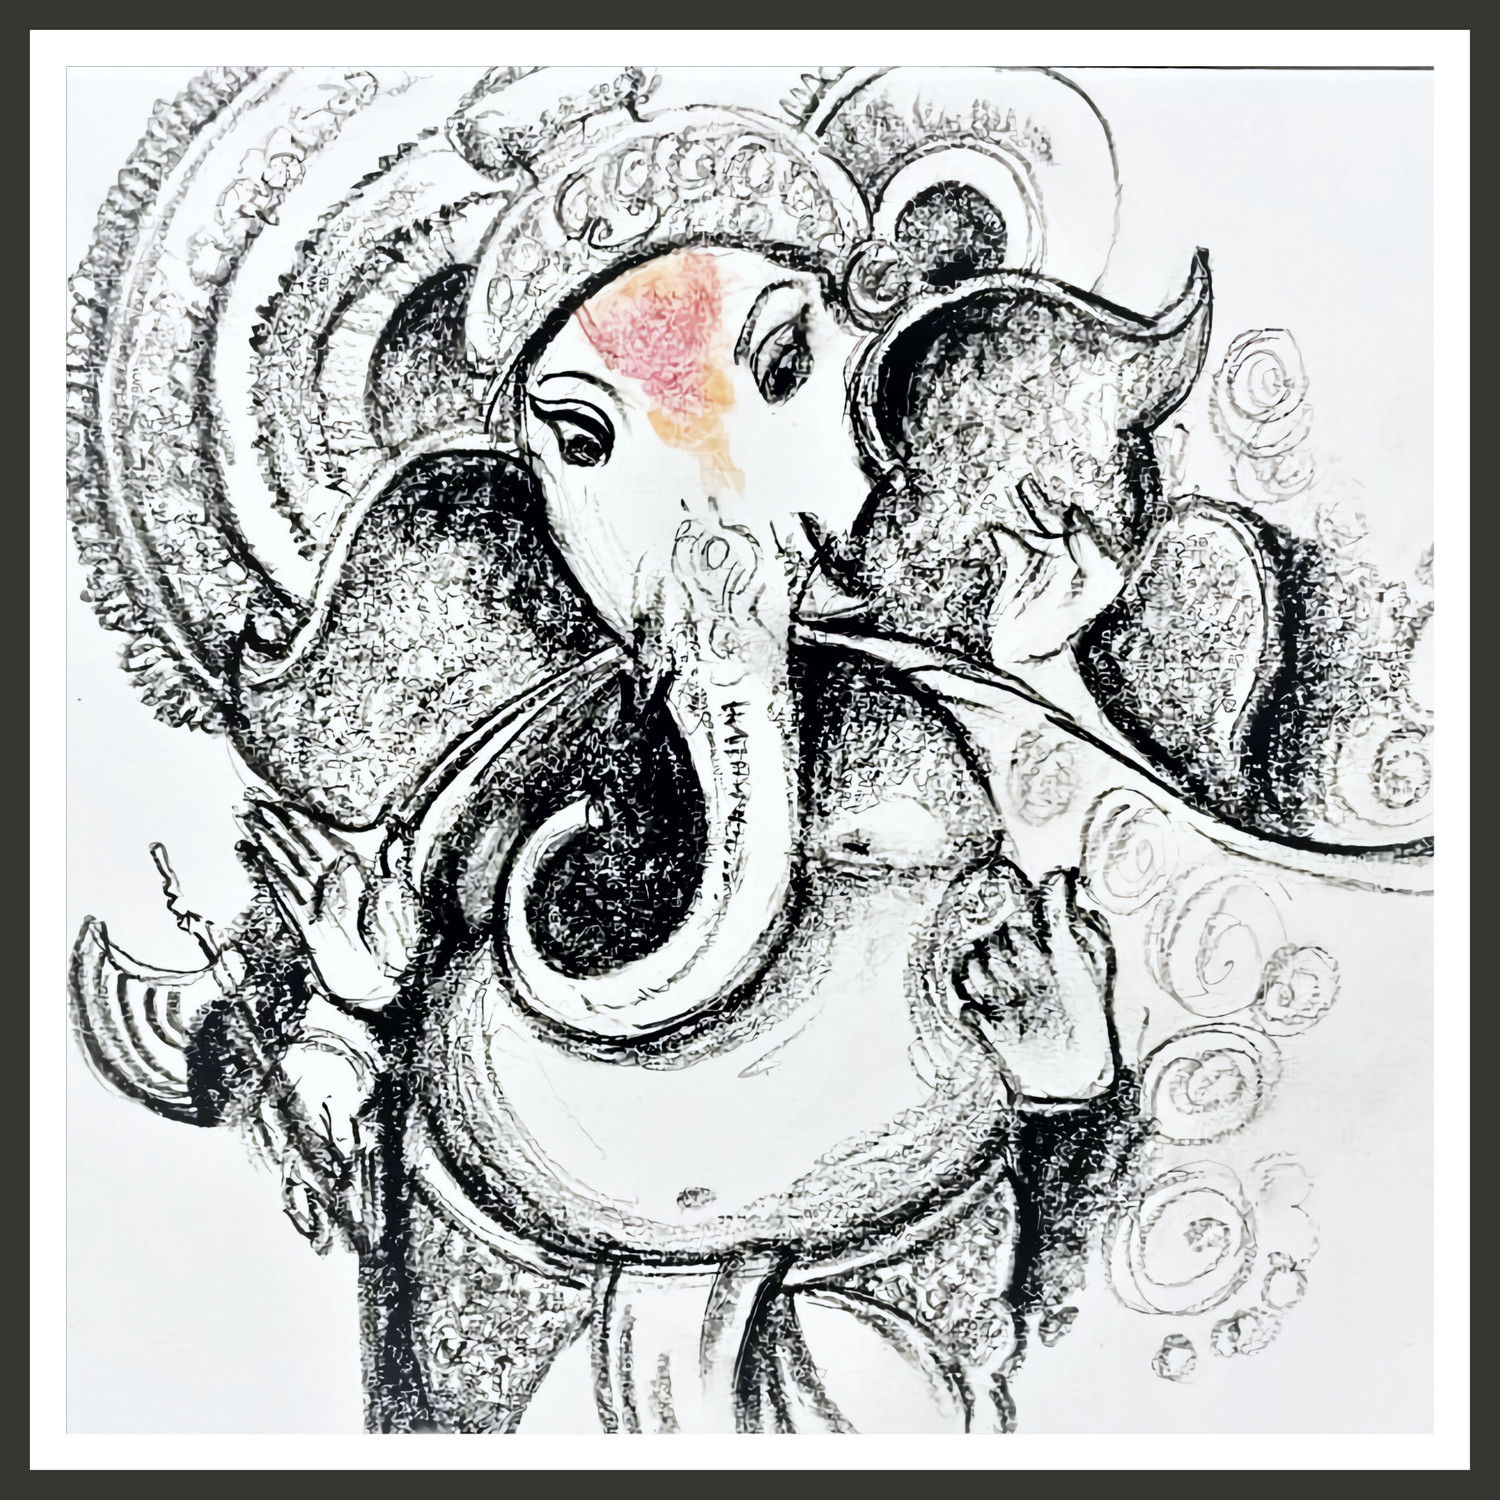 Ganpati Bappa pencil drawing easy for beginners, Lord Ganesha sketch step  by step | Pencil drawings easy, Ganesha drawing, Ganesha sketch